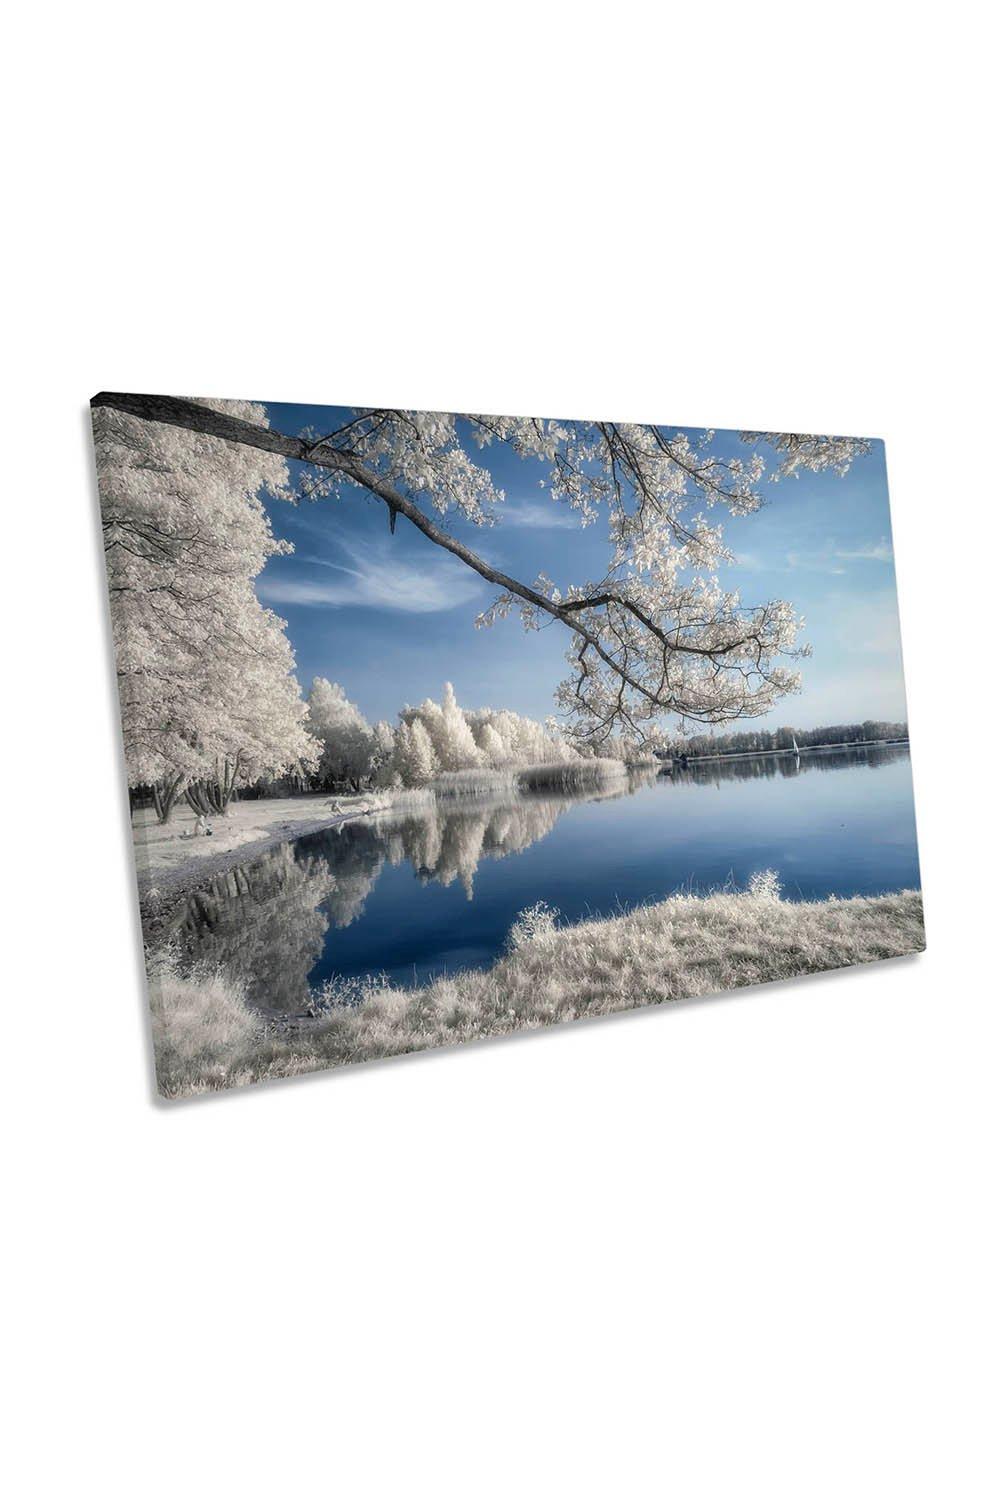 Winter Snow Landscape Lake Canvas Wall Art Picture Print